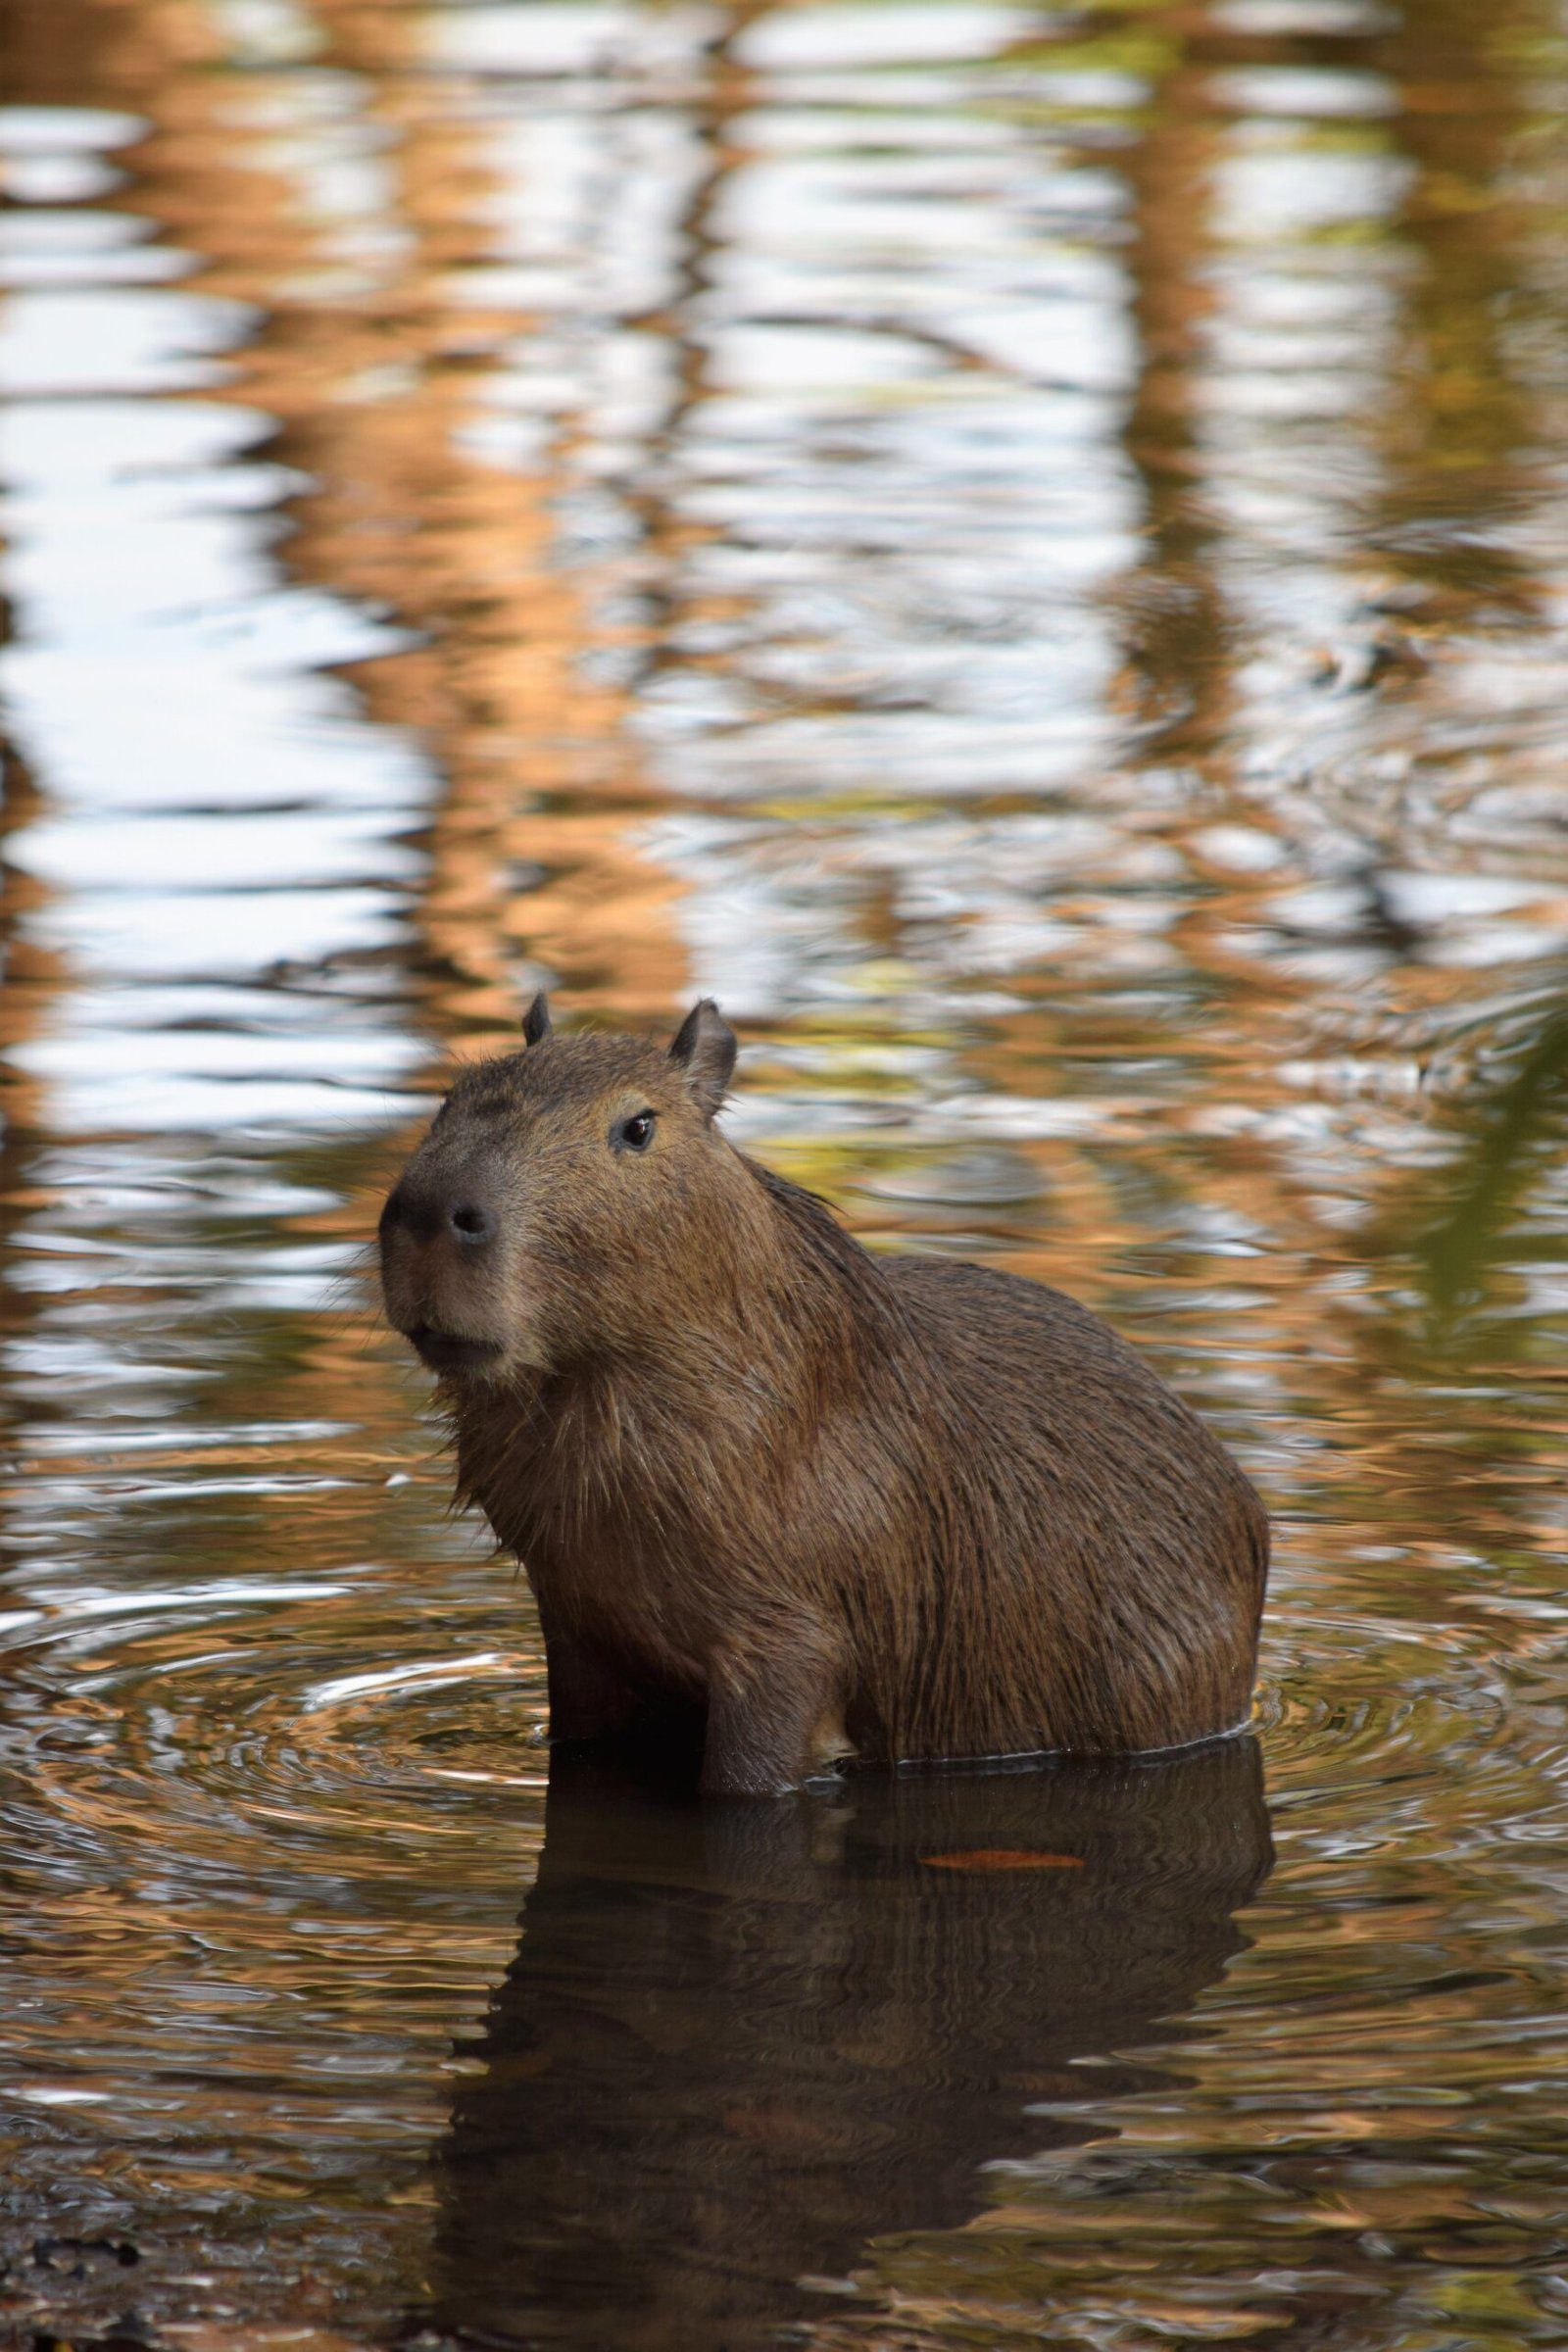 Where to Spot Capybaras in the Wild